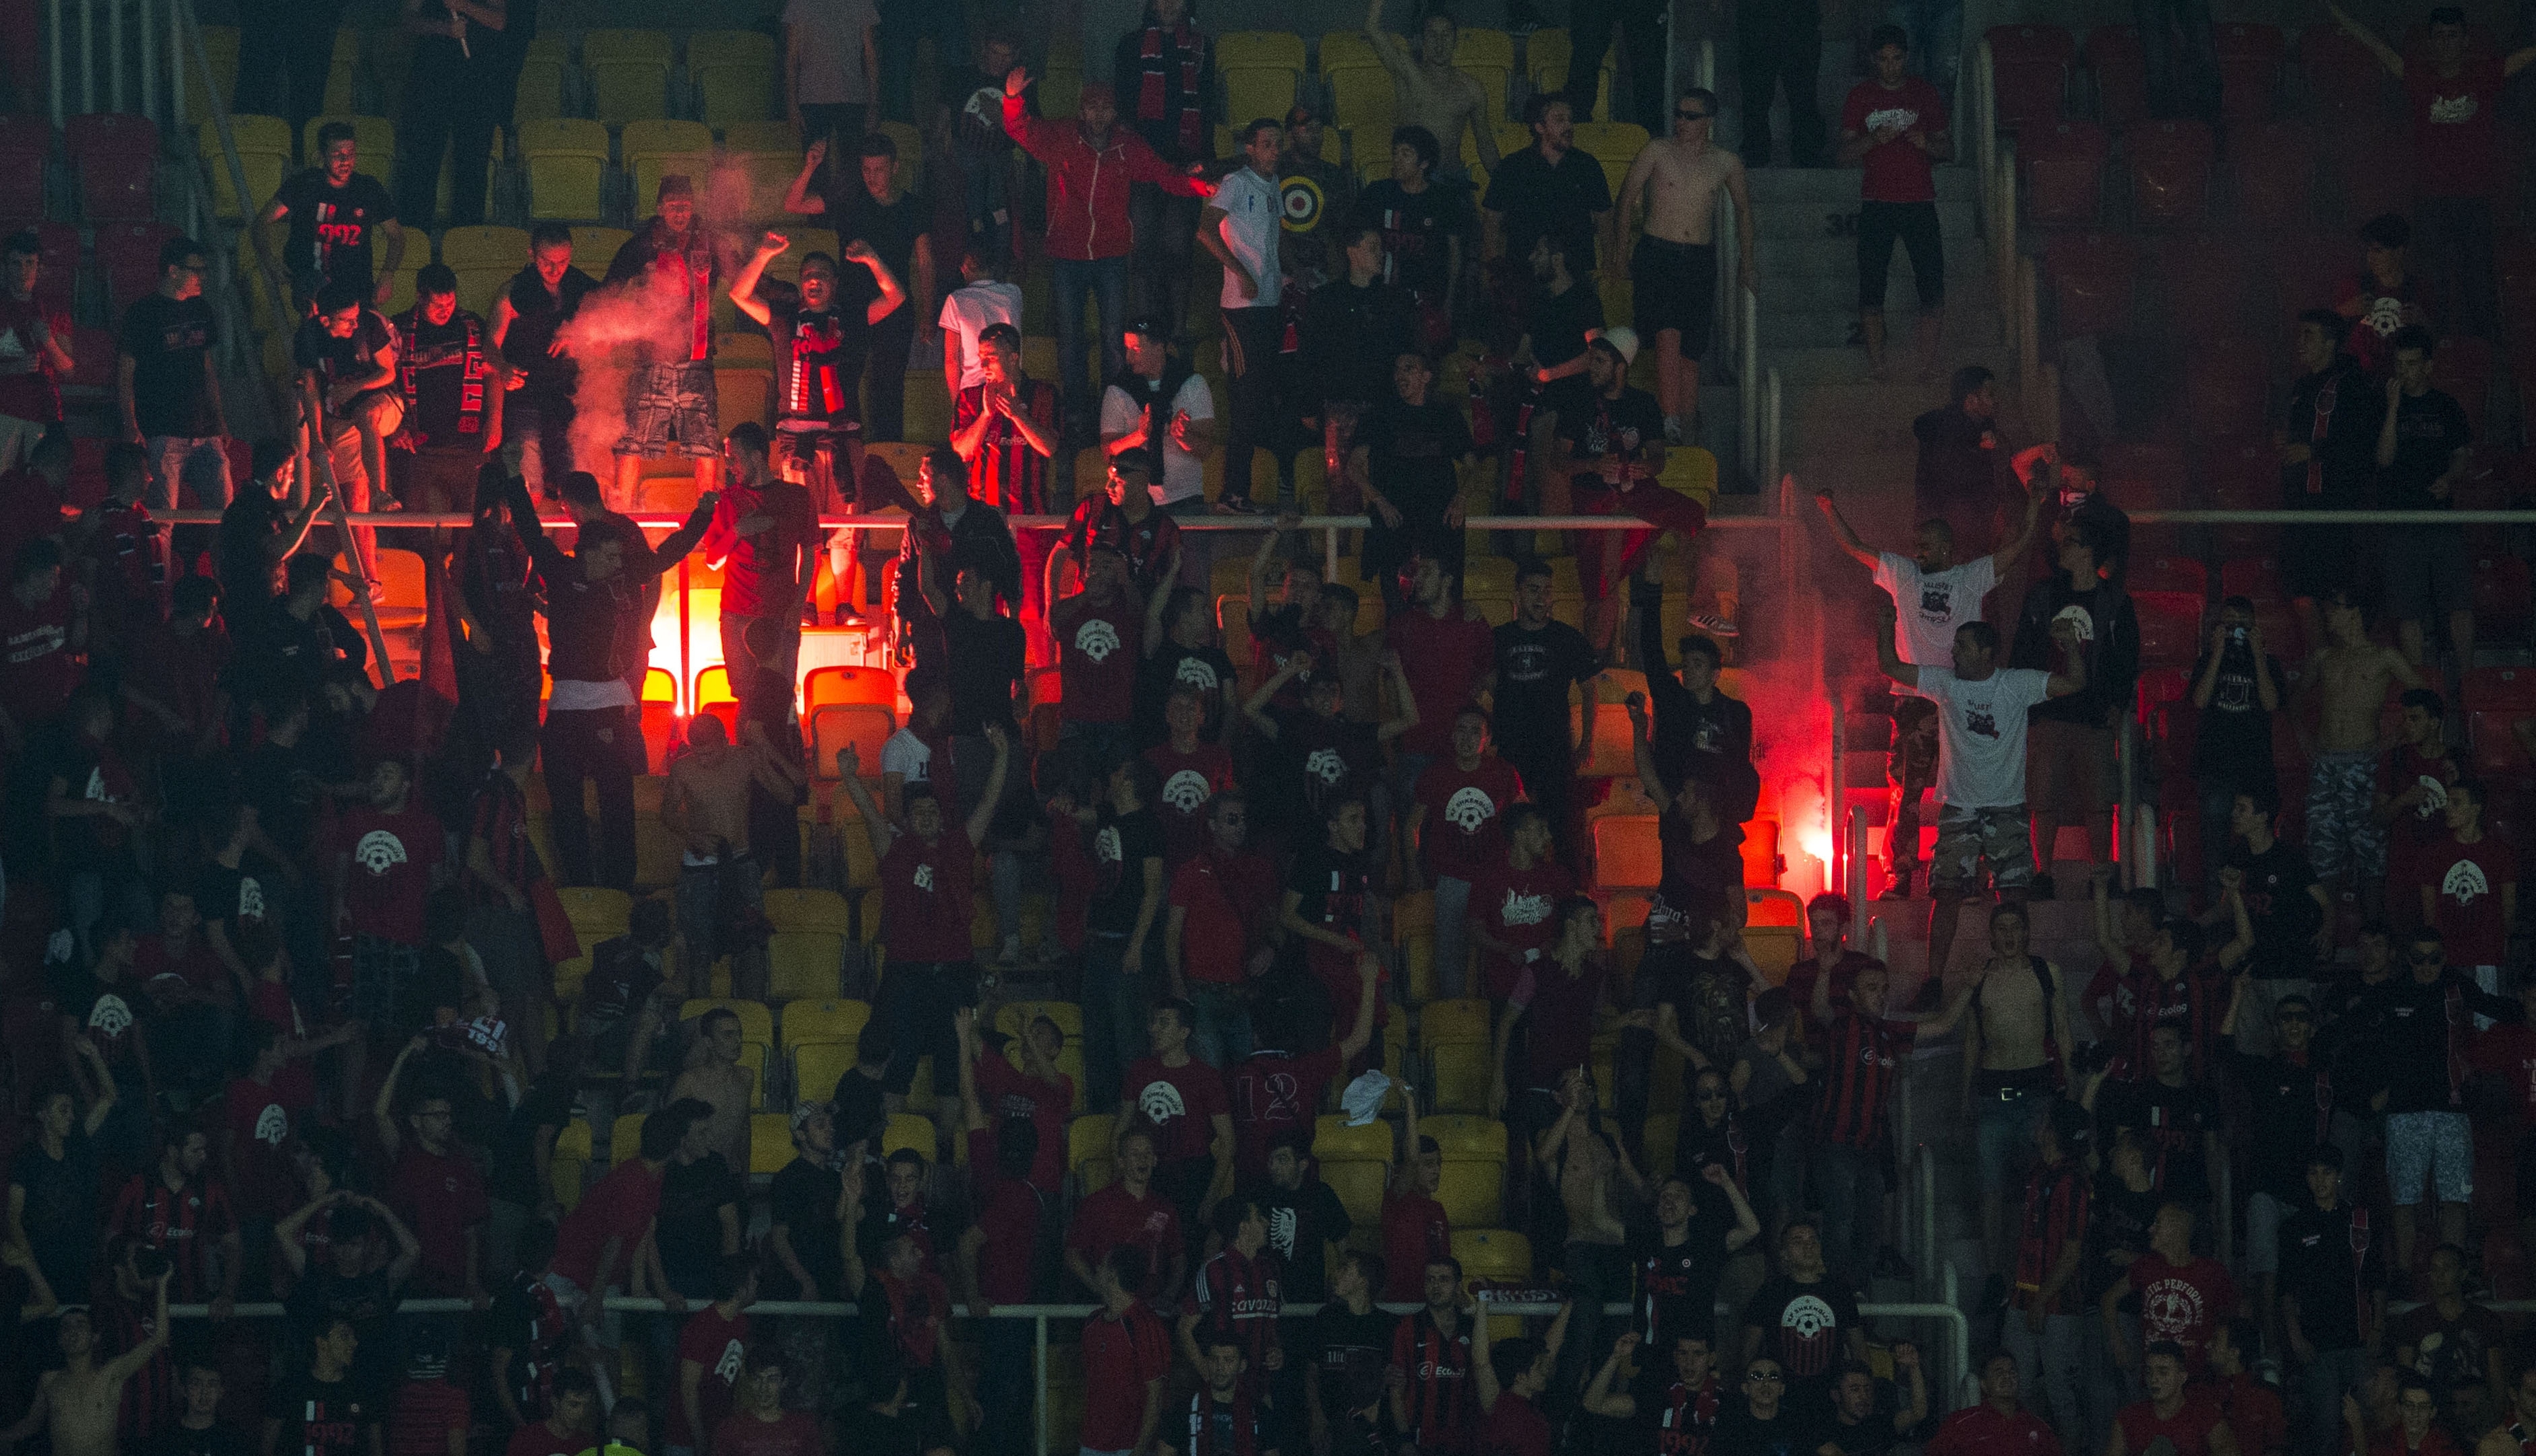 The Shkendija fans set off flares during the match